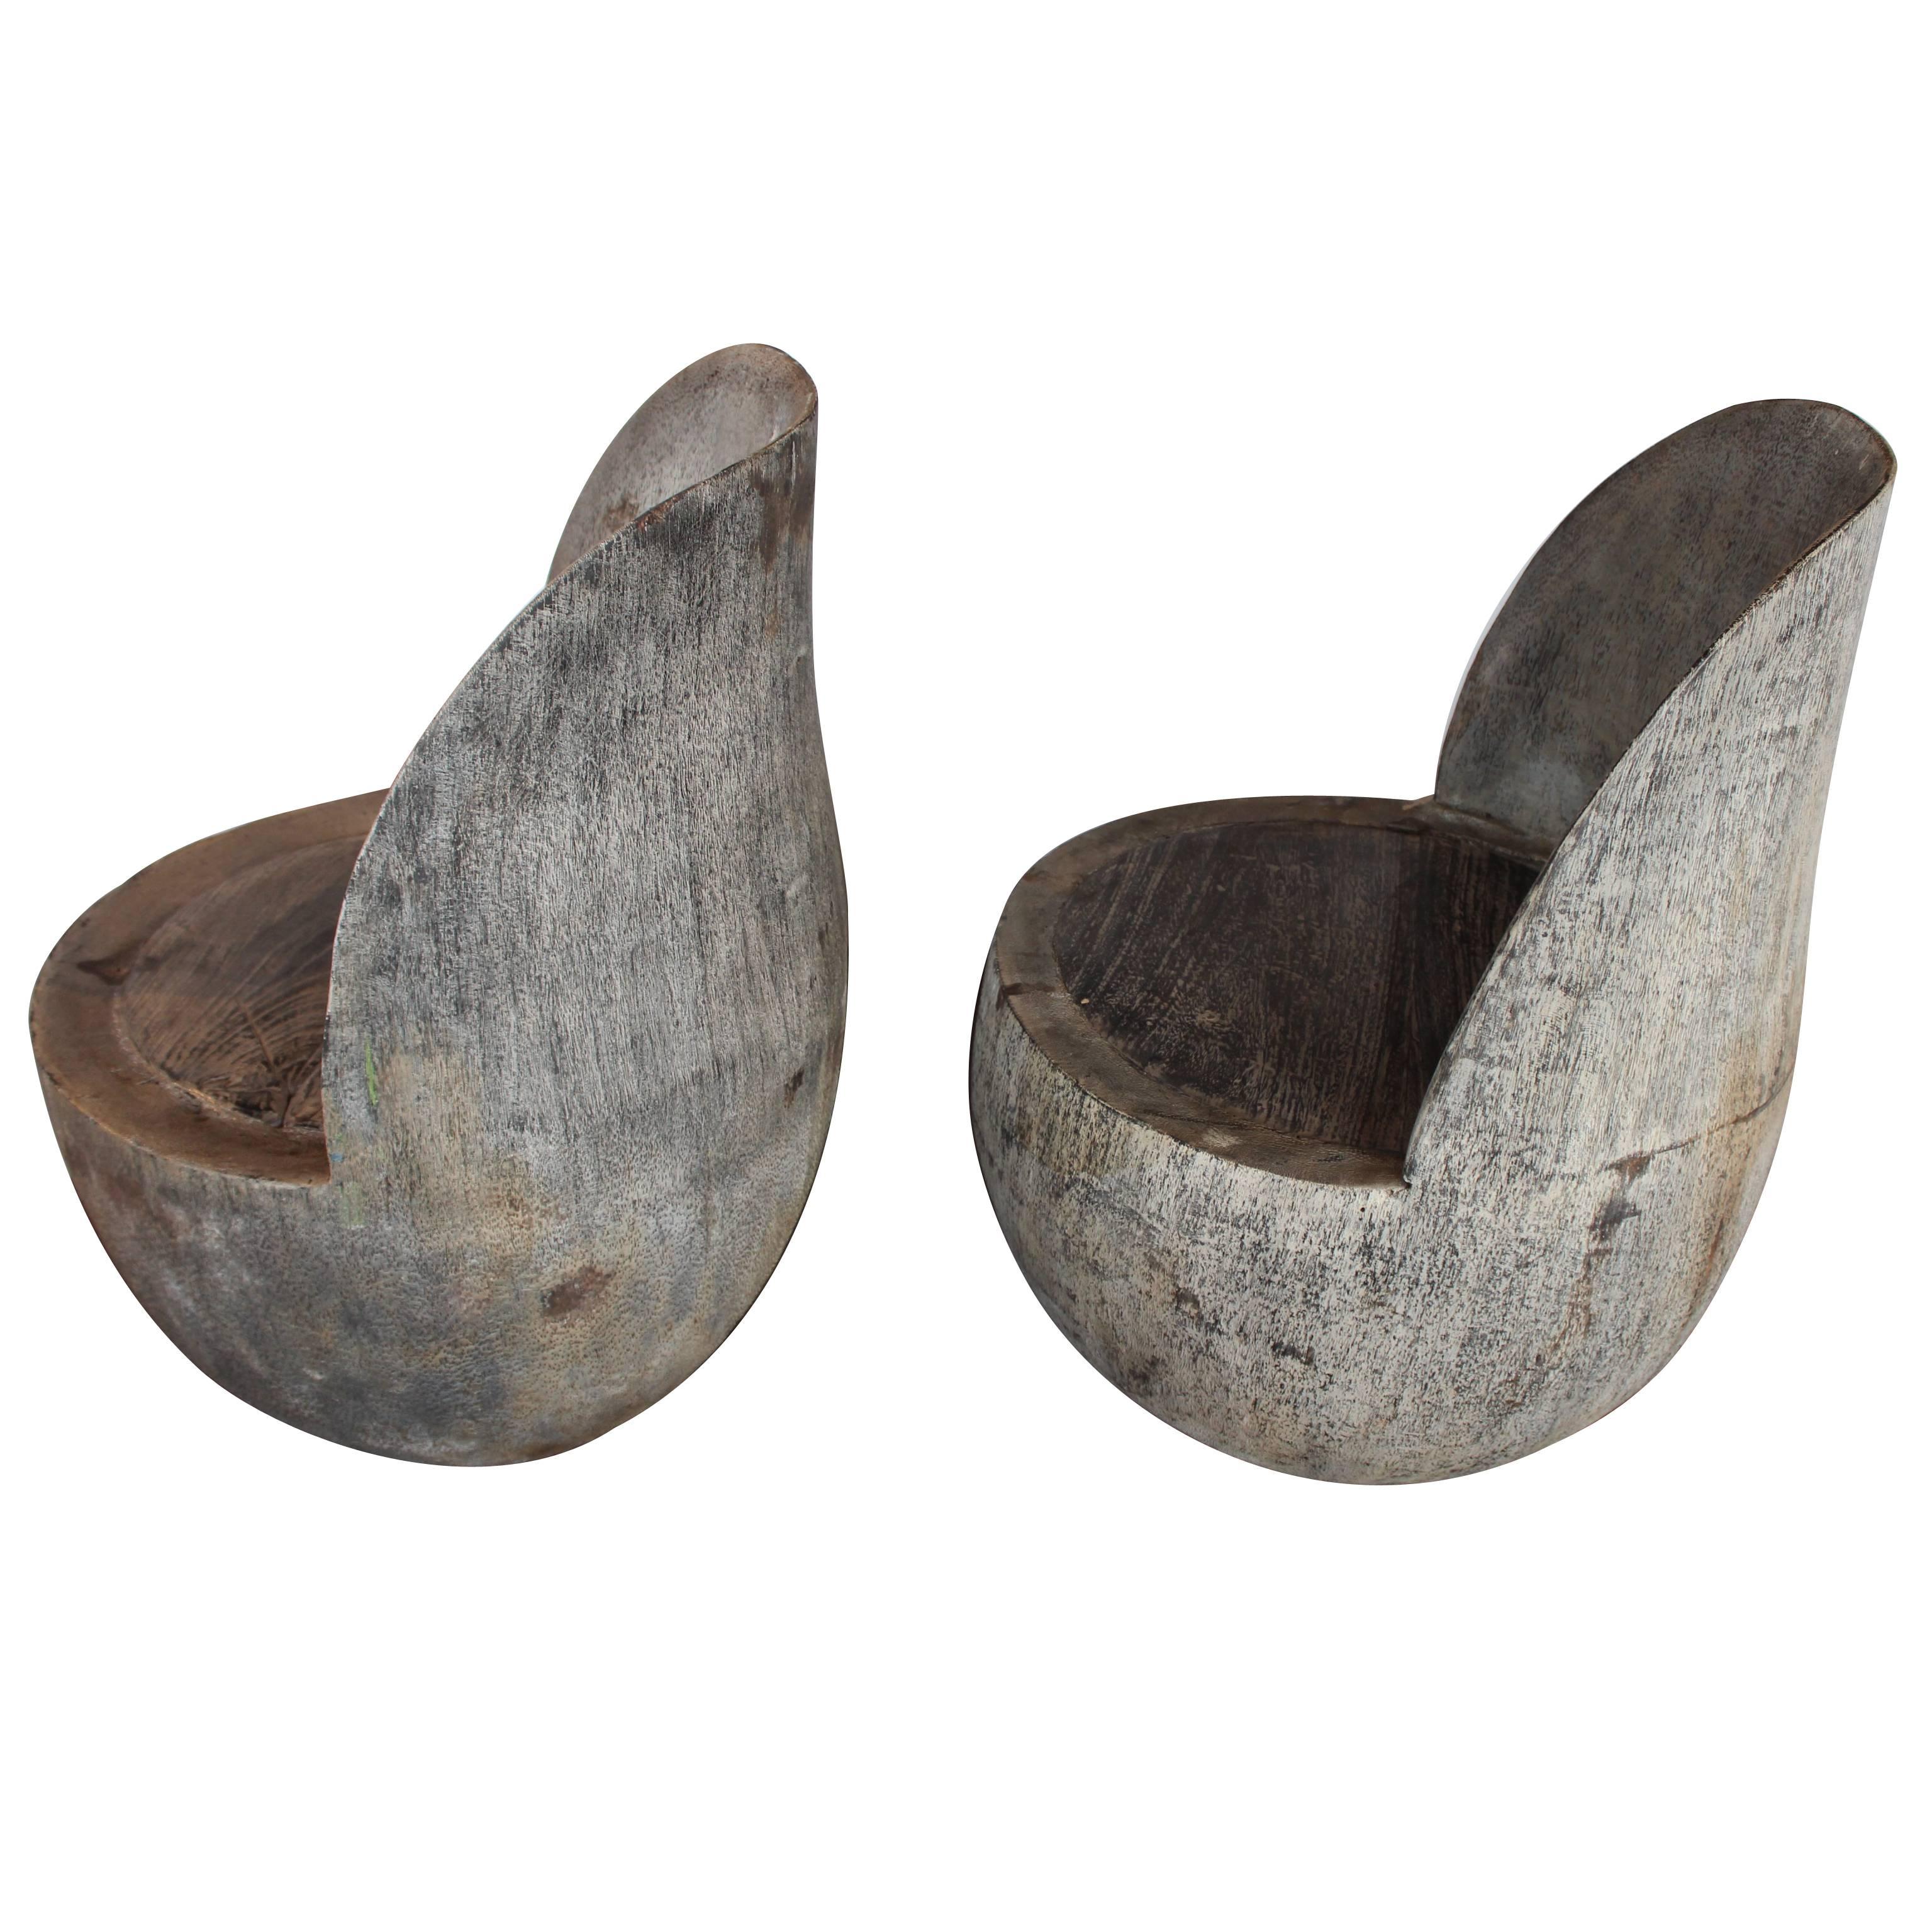 Organic Modern Coconut Chairs